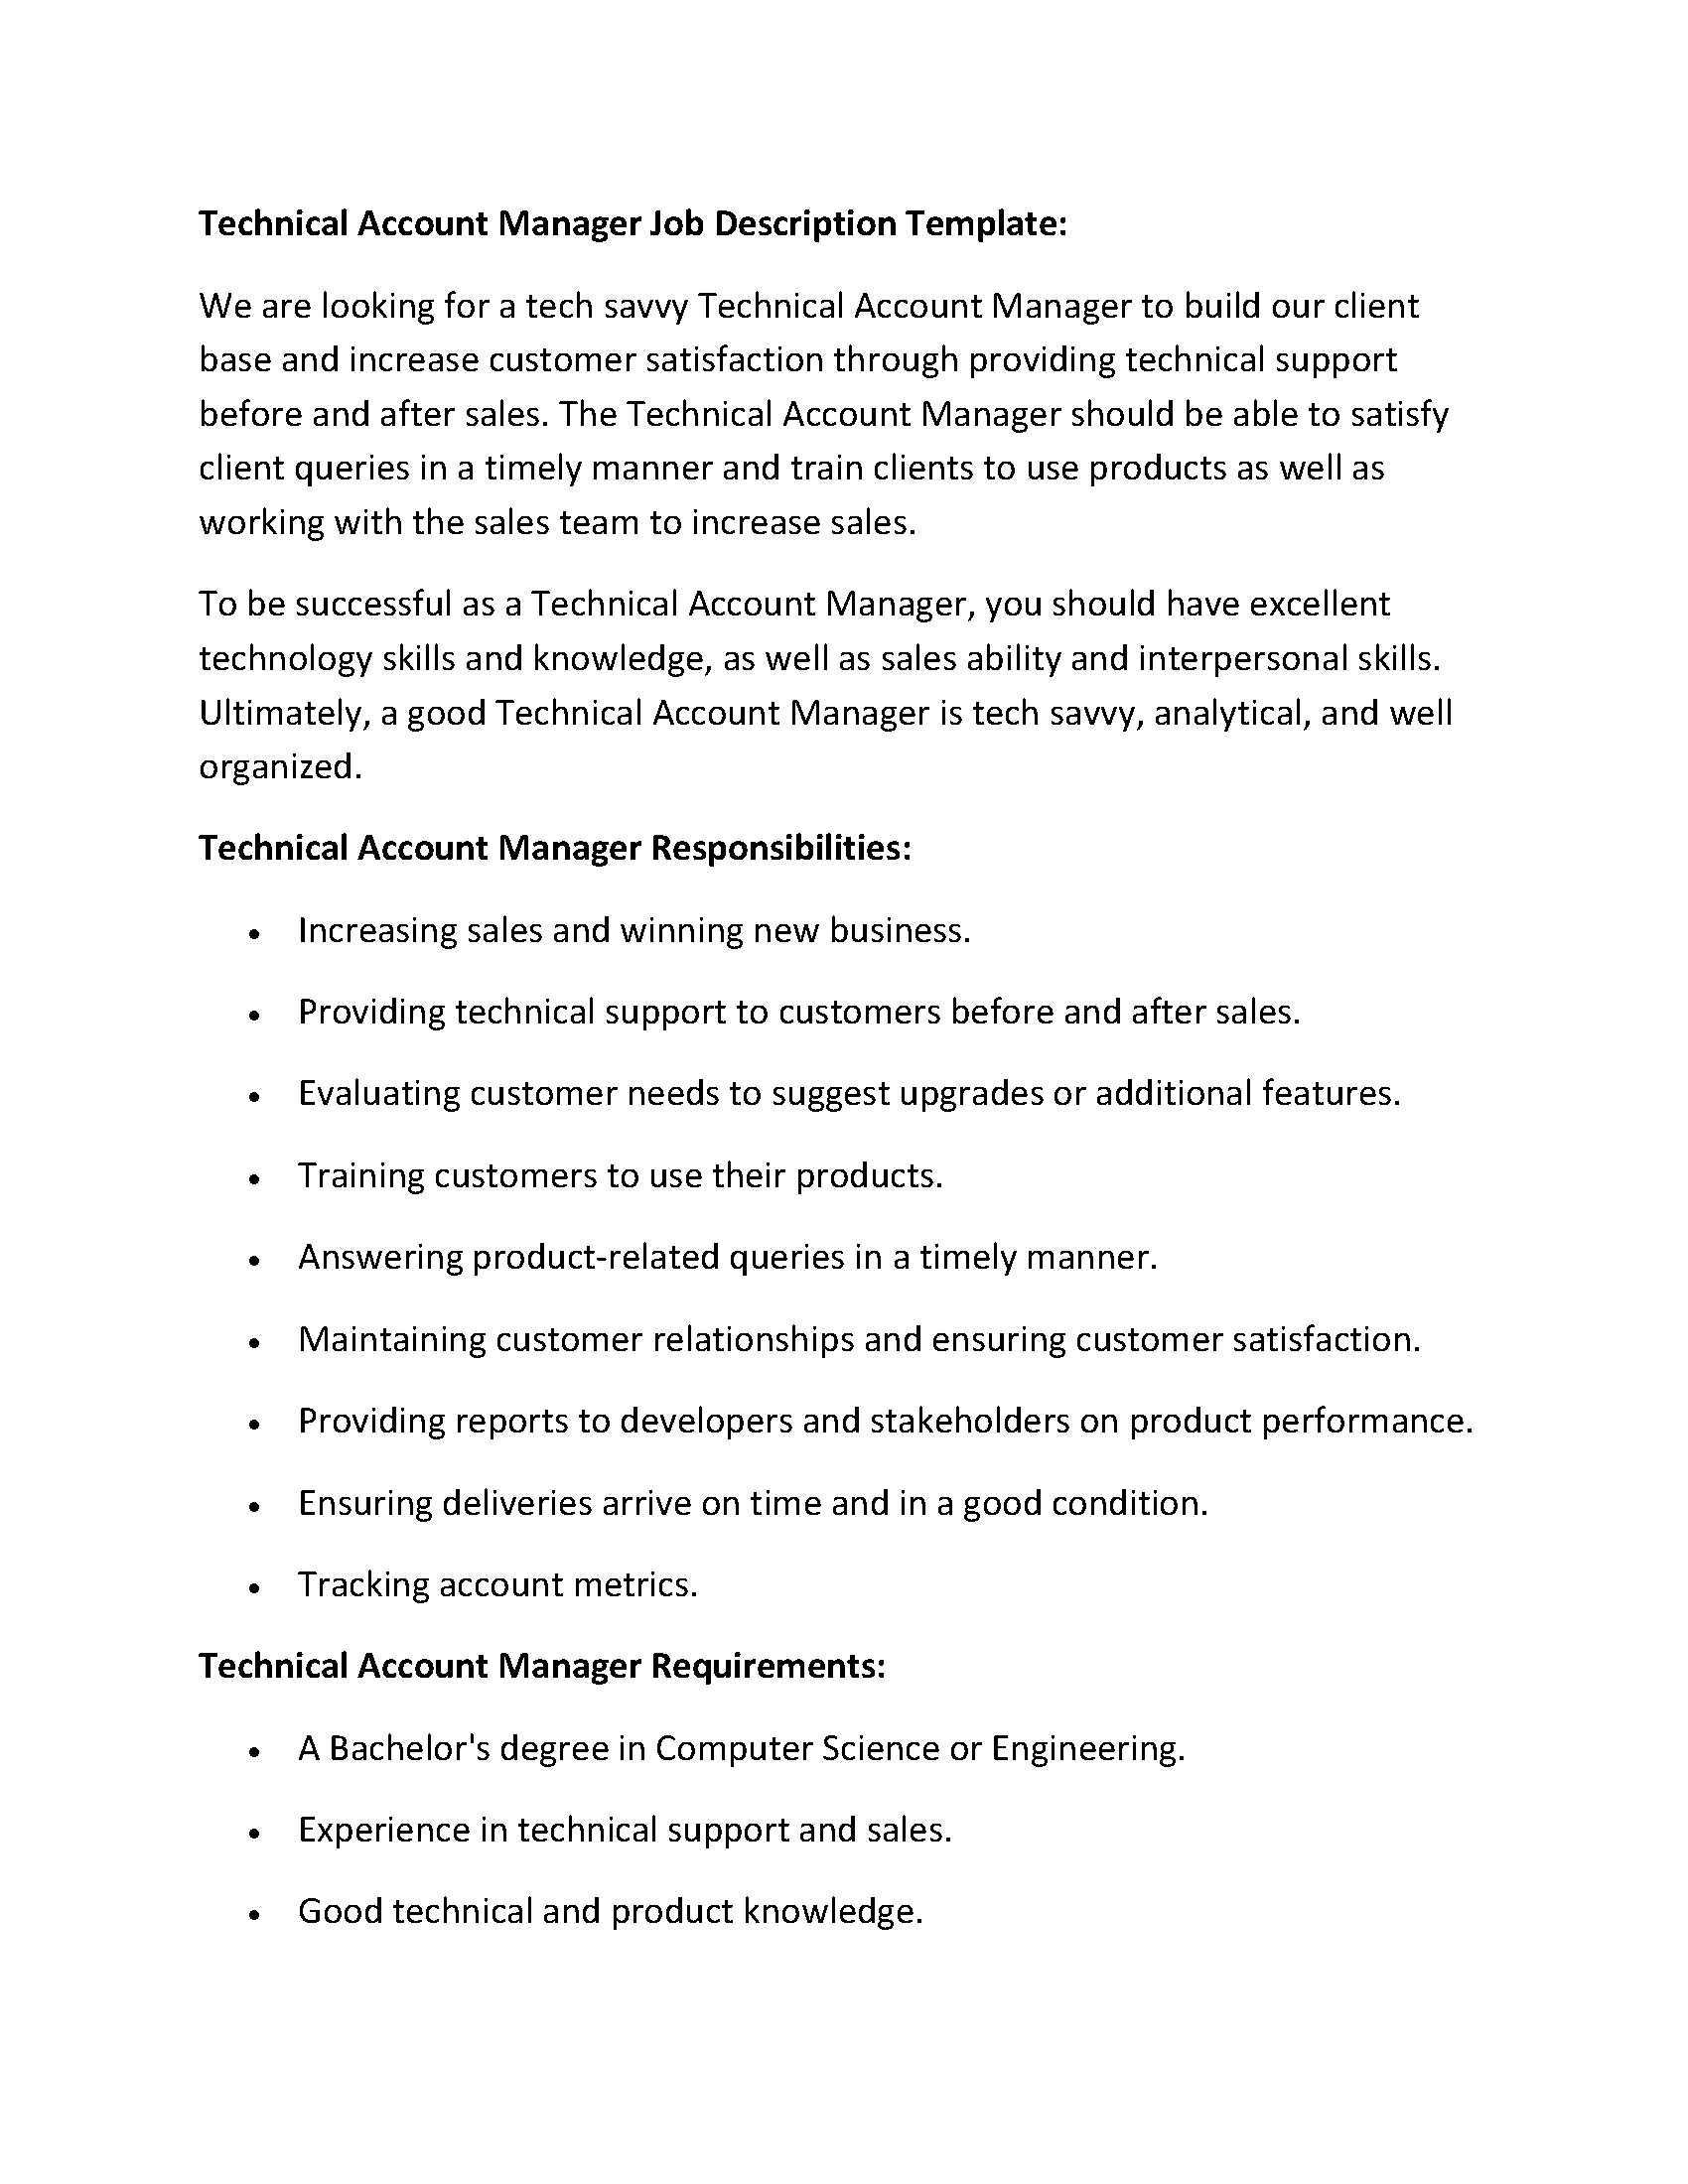 Technical Account Manager Job Description Template